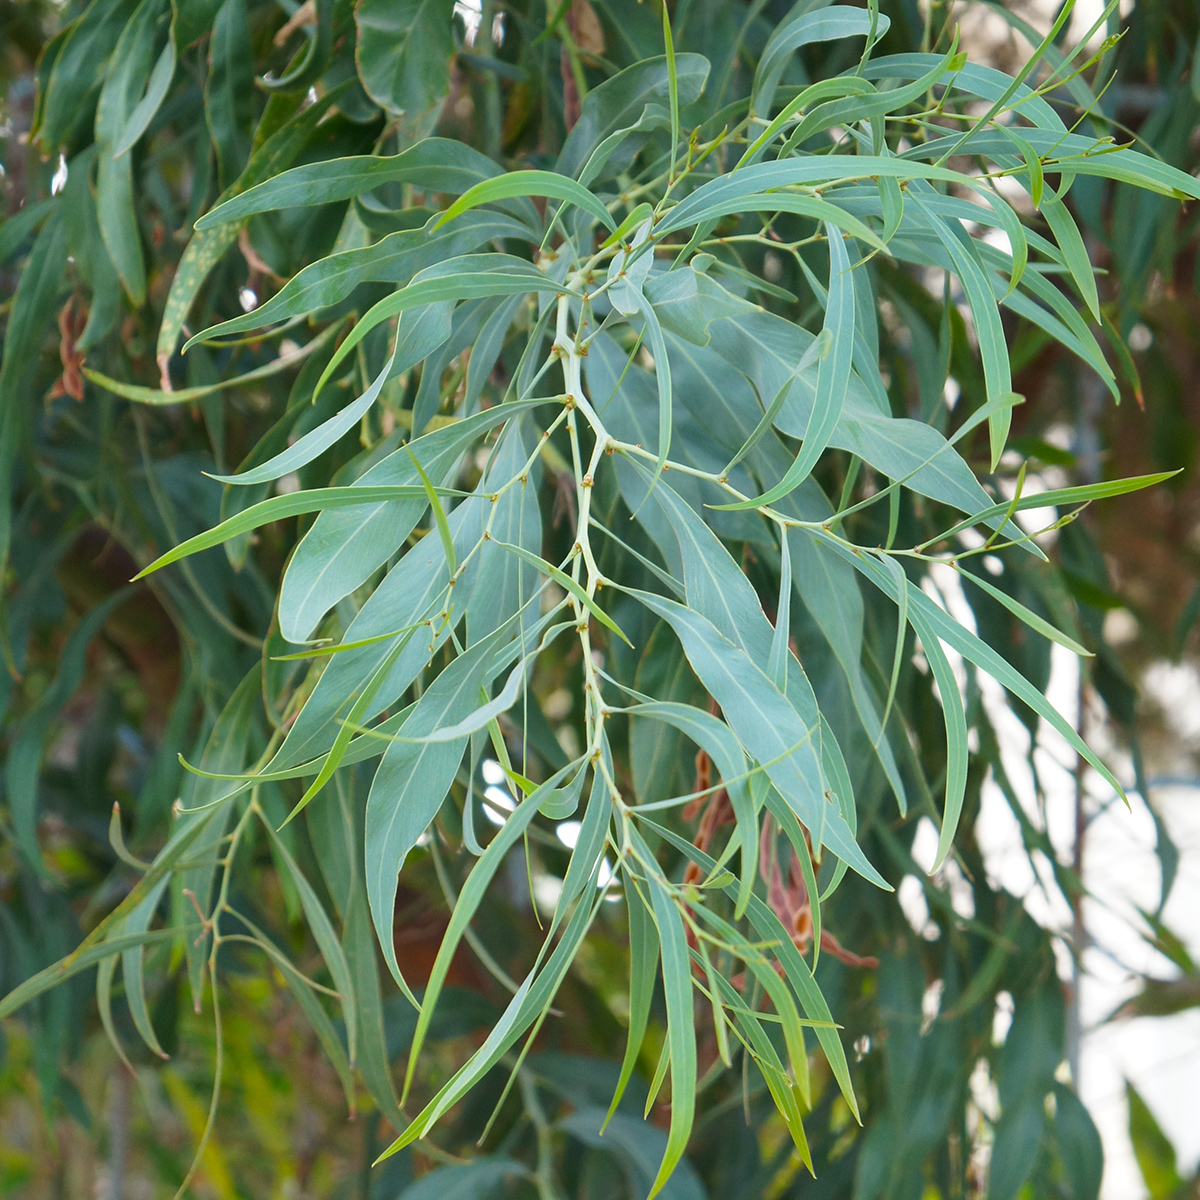 Willow Peppermint Eucalyptus